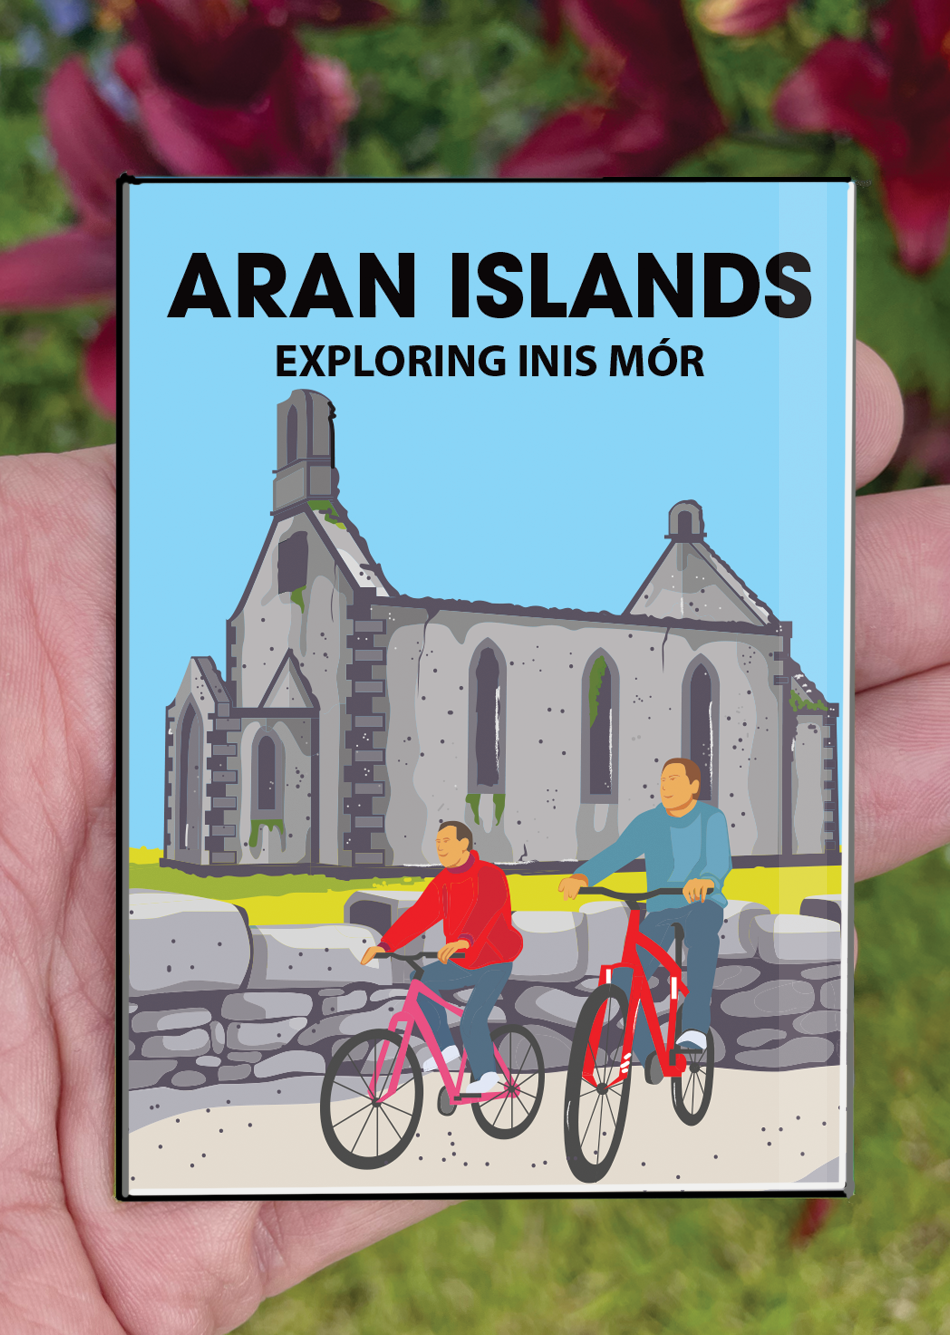 Galway Postcard or A4 Mounted Print or Fridge Magnet - Aran Islands